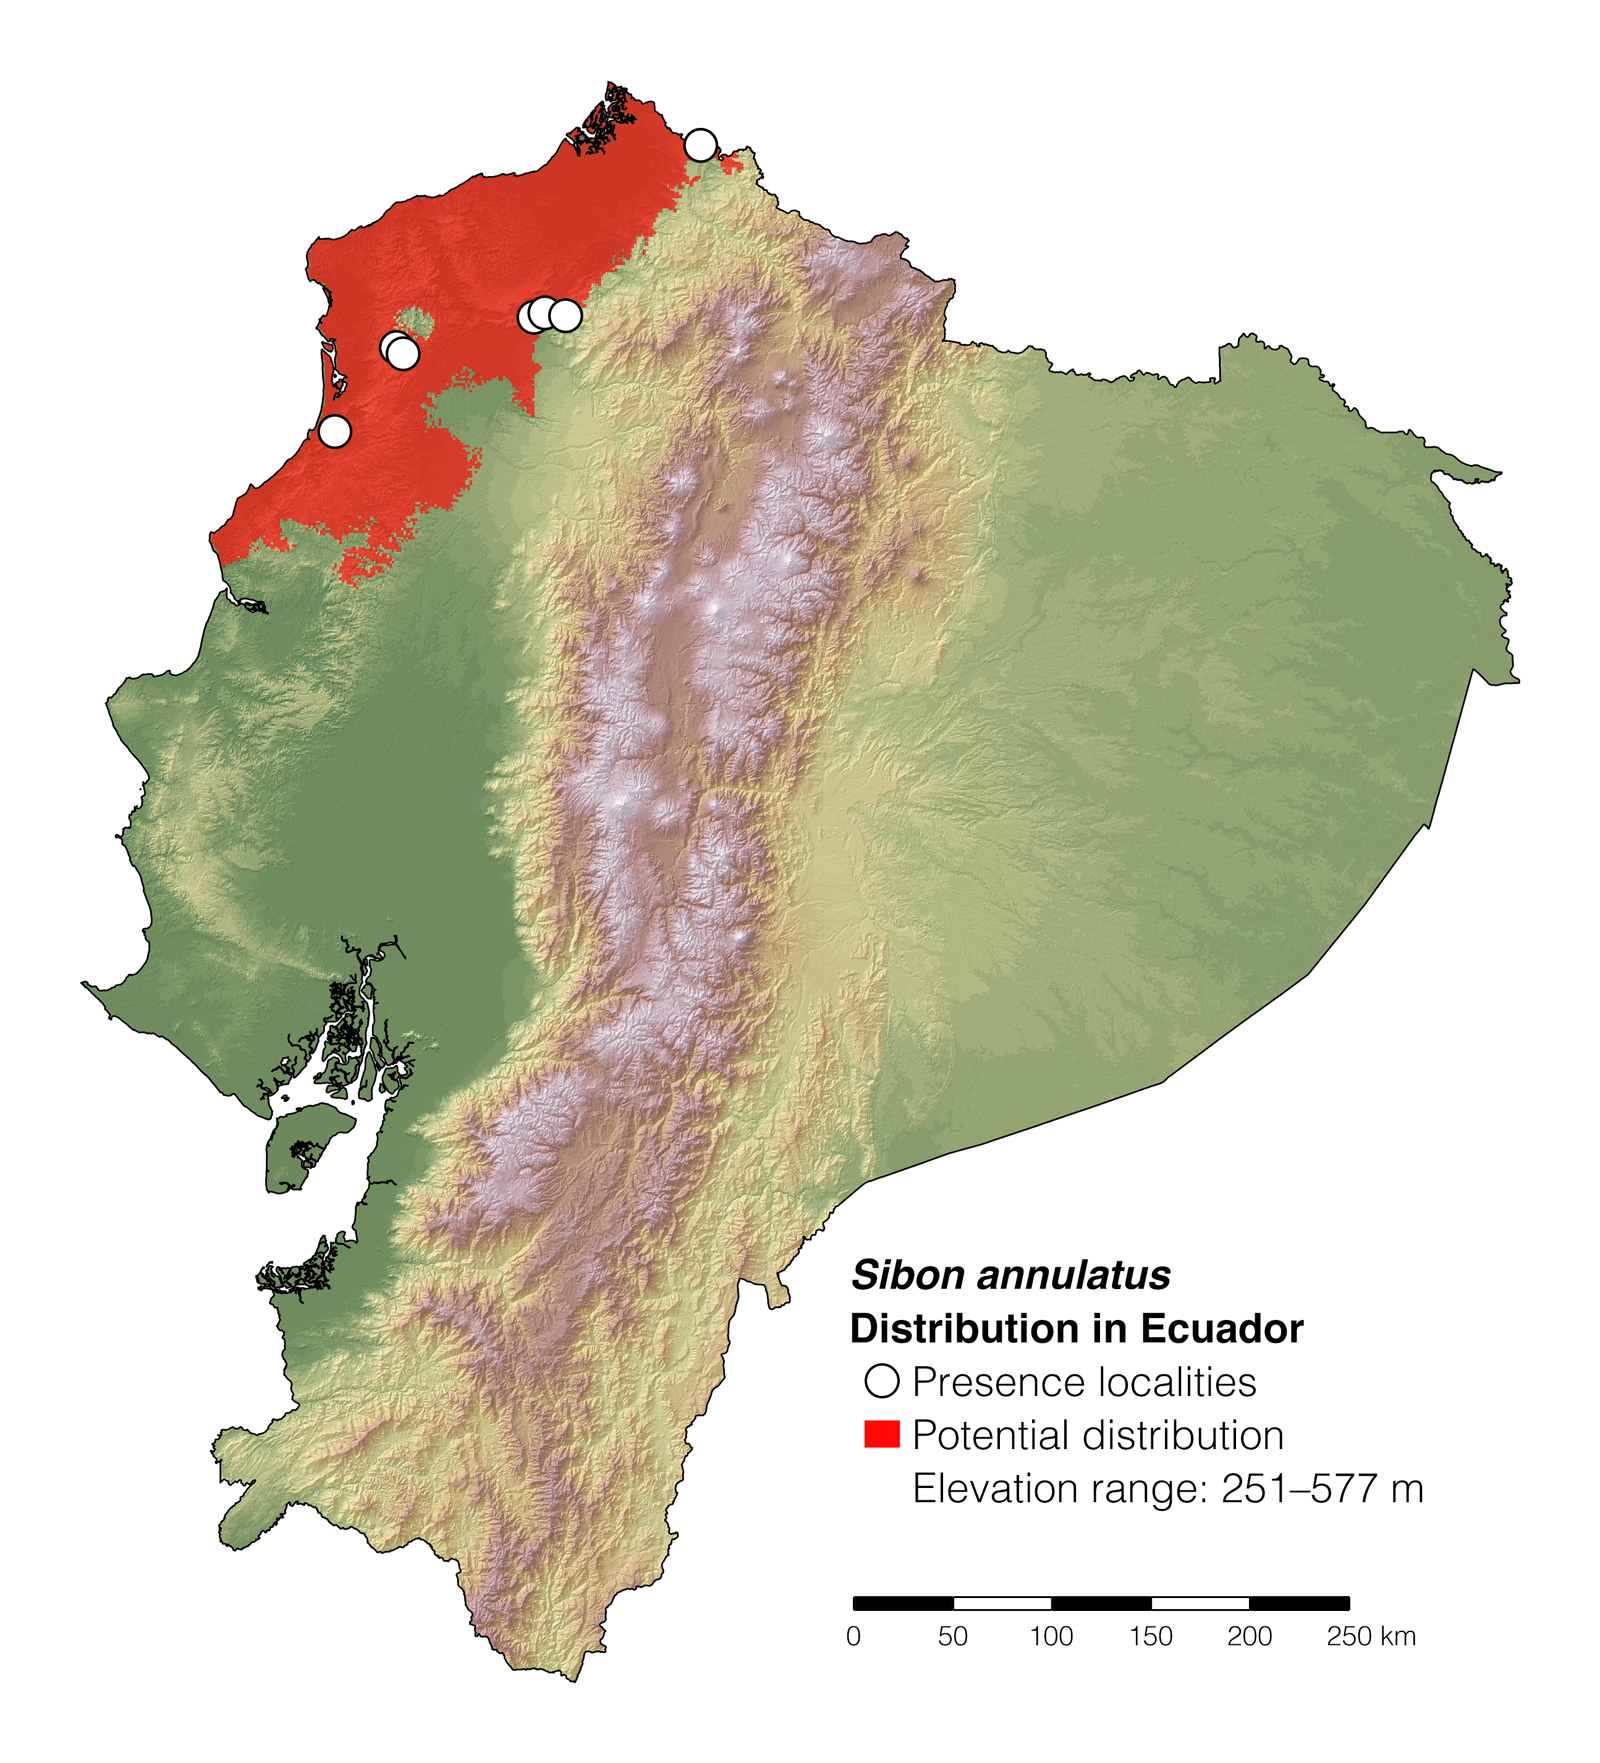 Distribution of Sibon annulatus in Ecuador